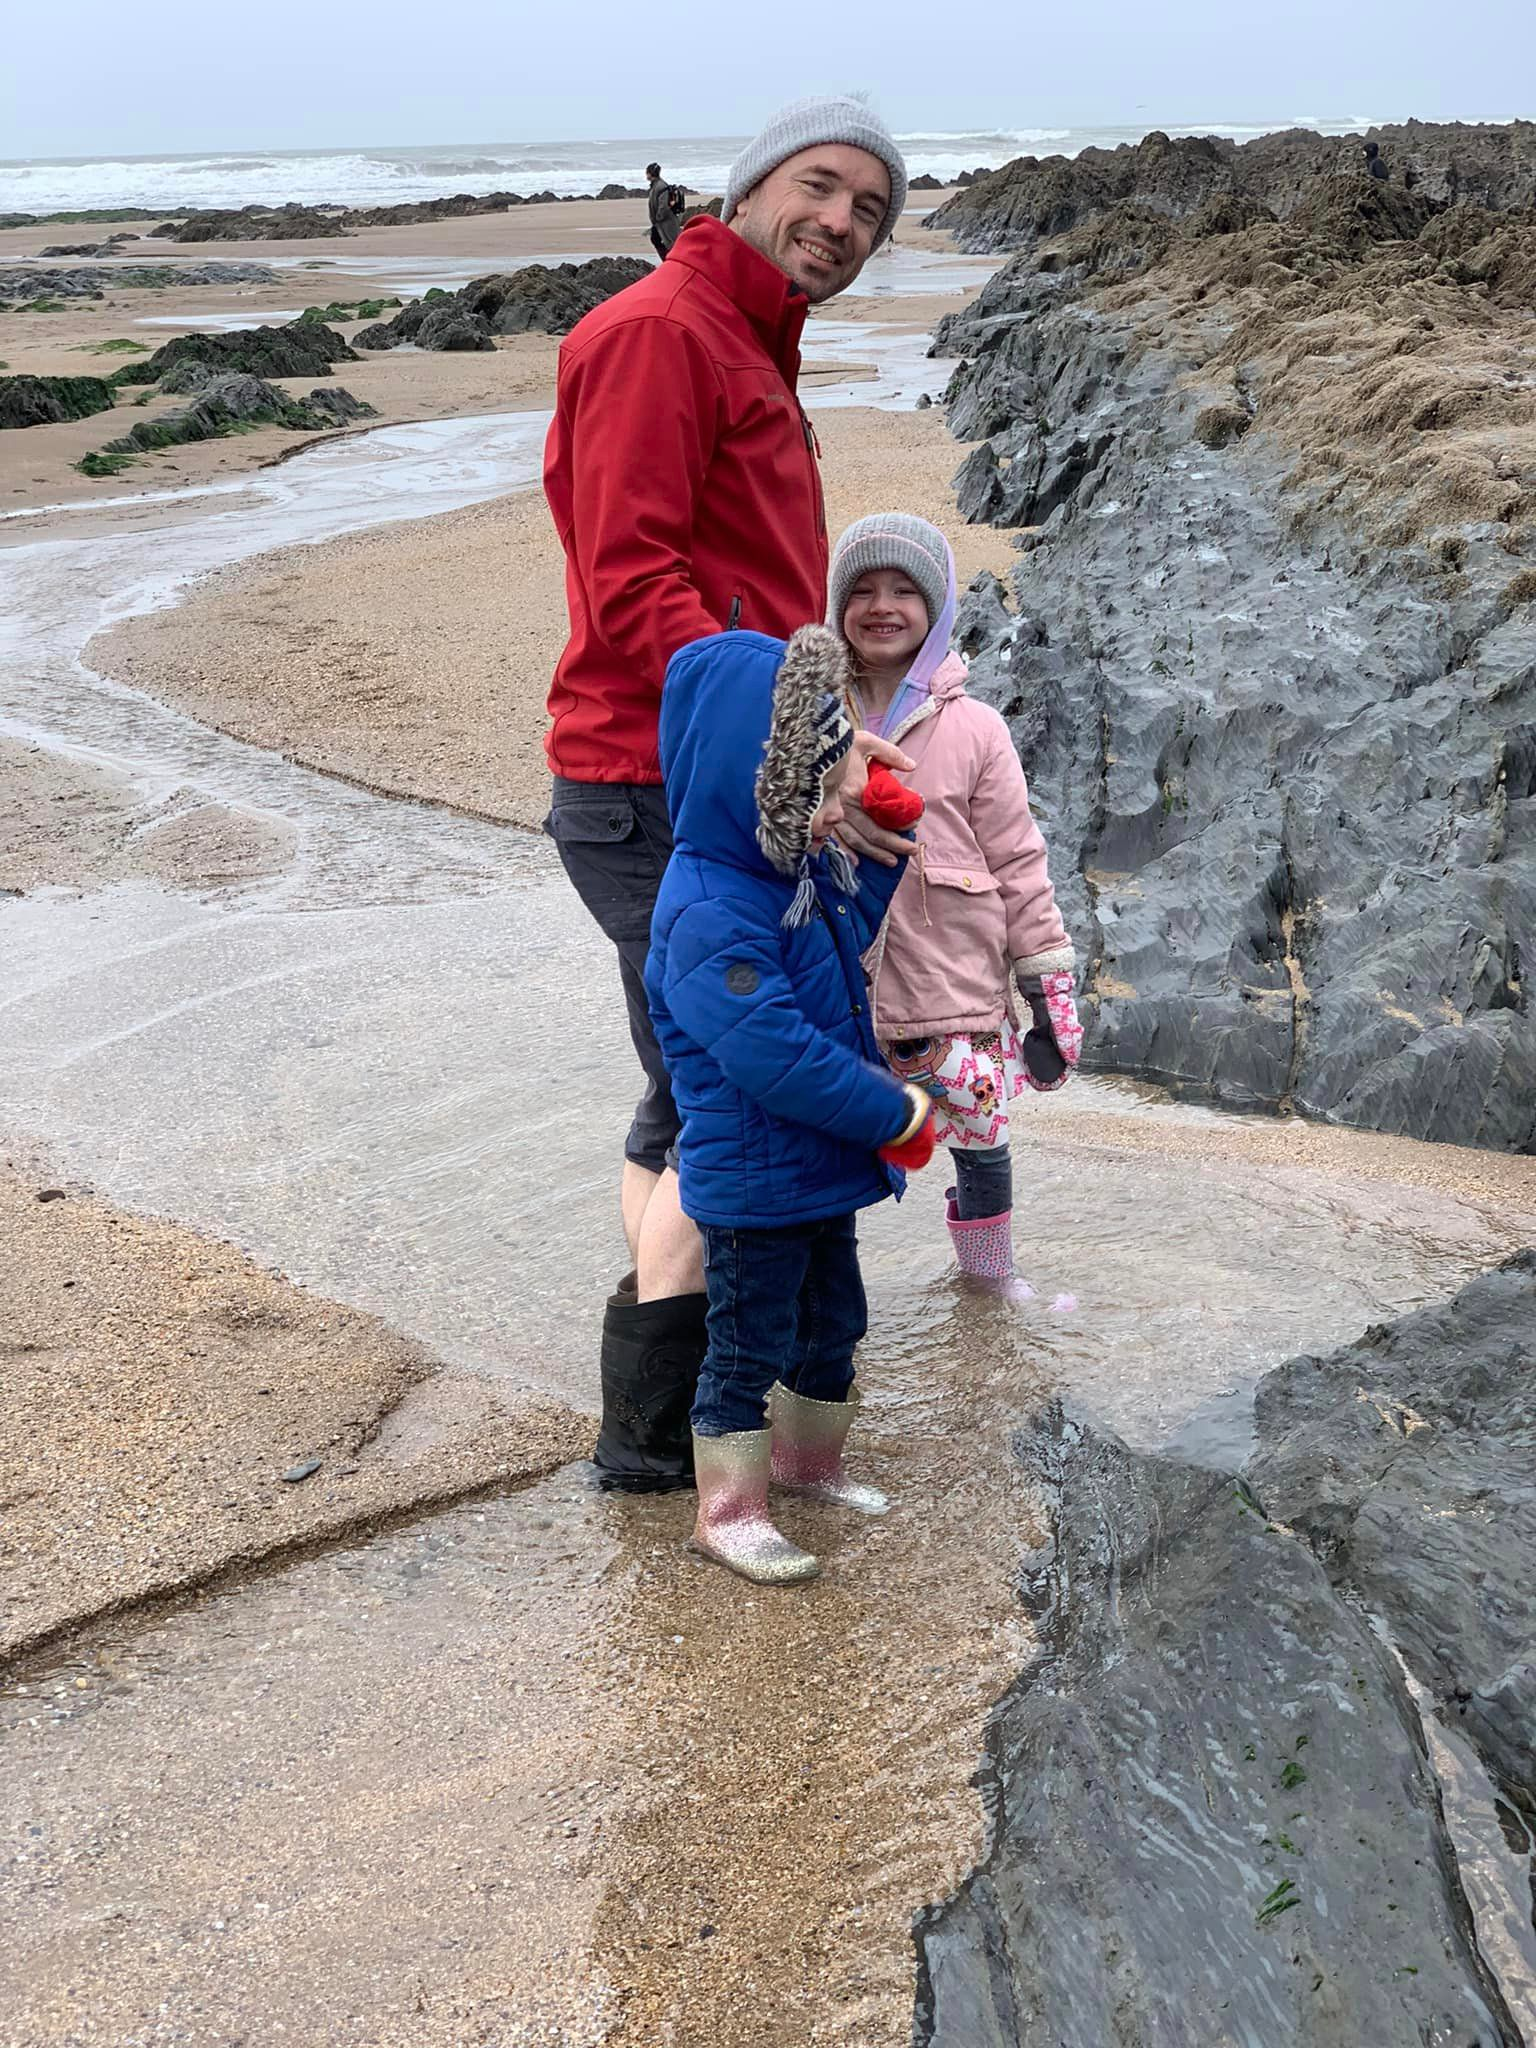 Joe Reddington and children on the beach